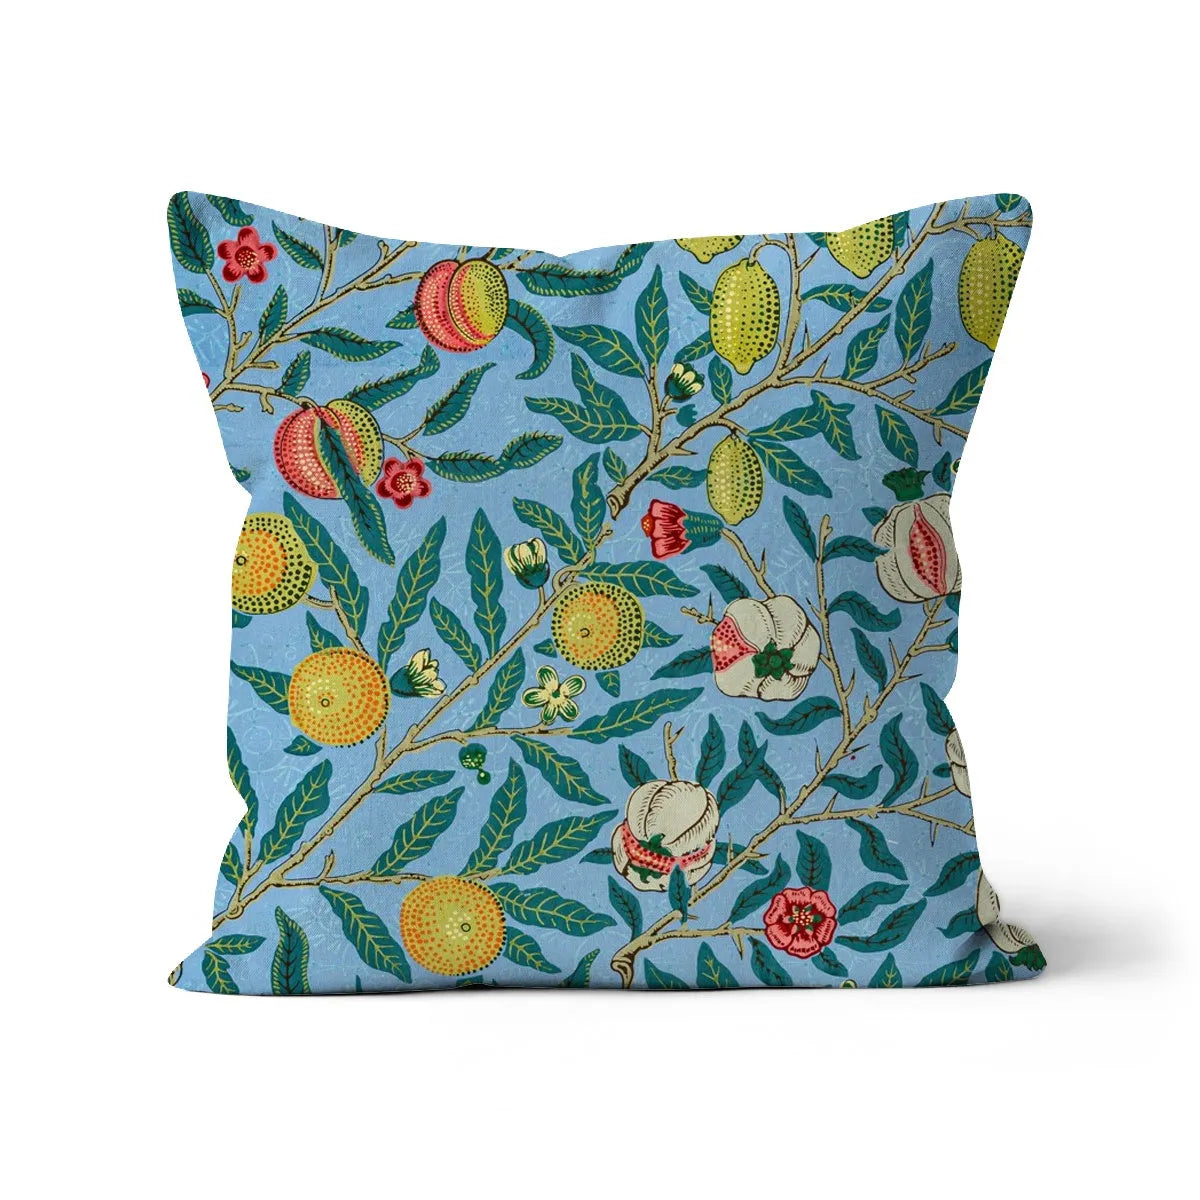 Four Fruits - William Morris Cushion - Decorative Throw Pillow - Canvas / 16x16